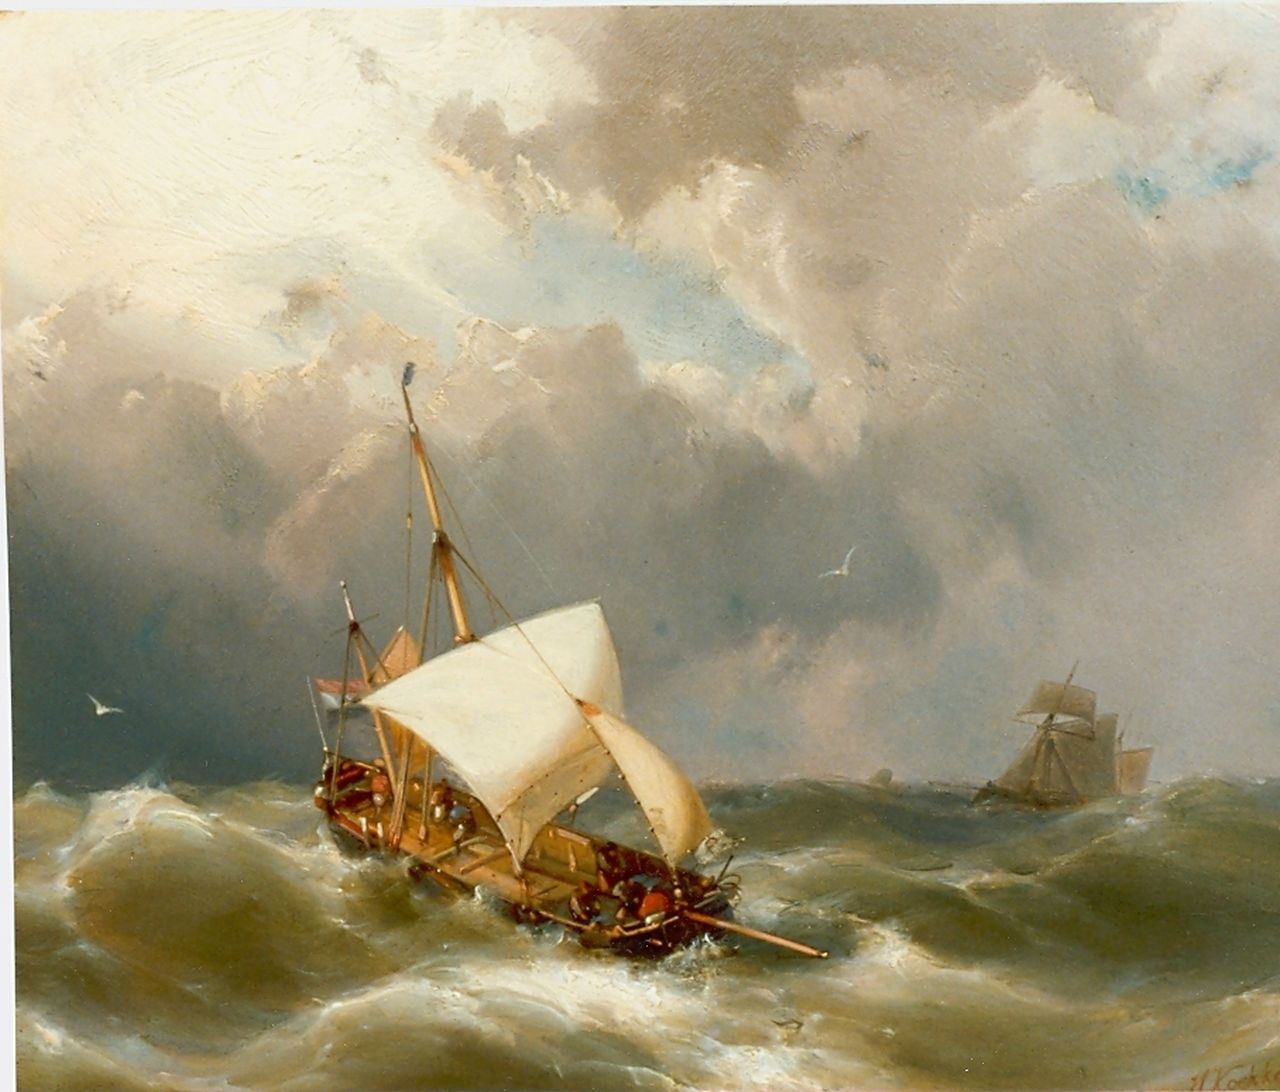 Koekkoek jr. H.  | Hermanus Koekkoek jr., Sailing boat in distress, oil on panel 21.2 x 25.9 cm, signed l.r.